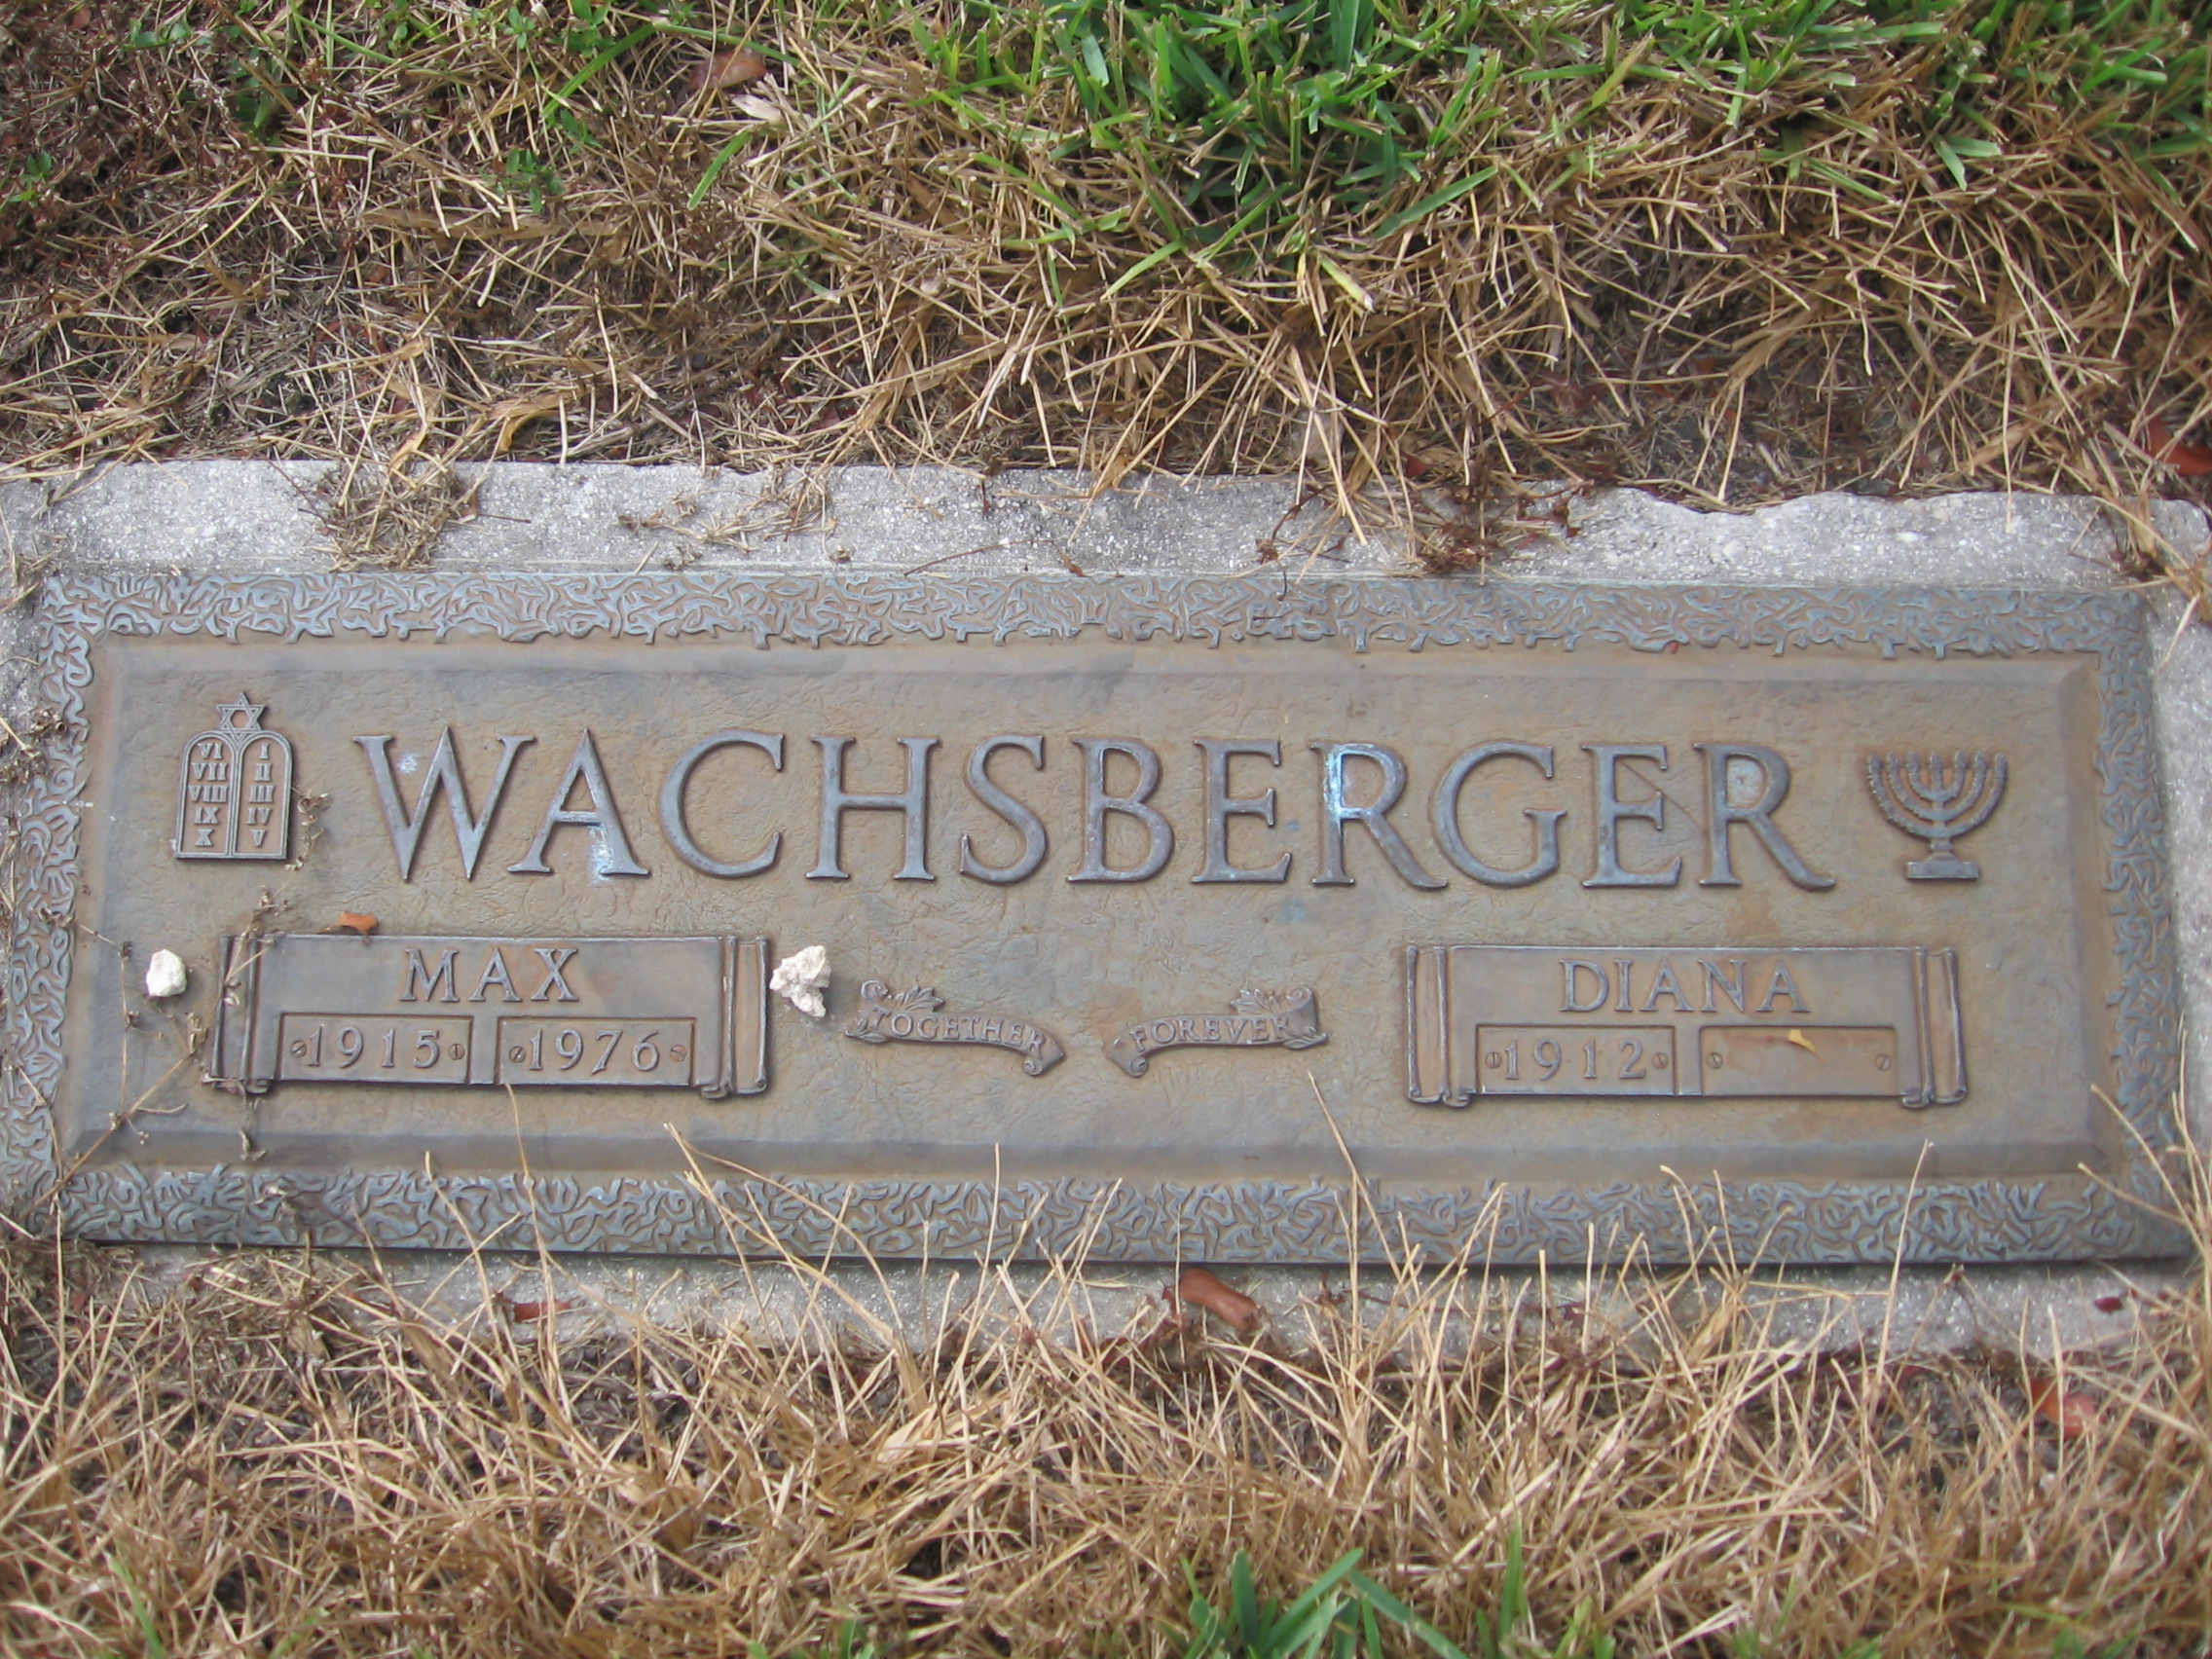 Max Wachsberger